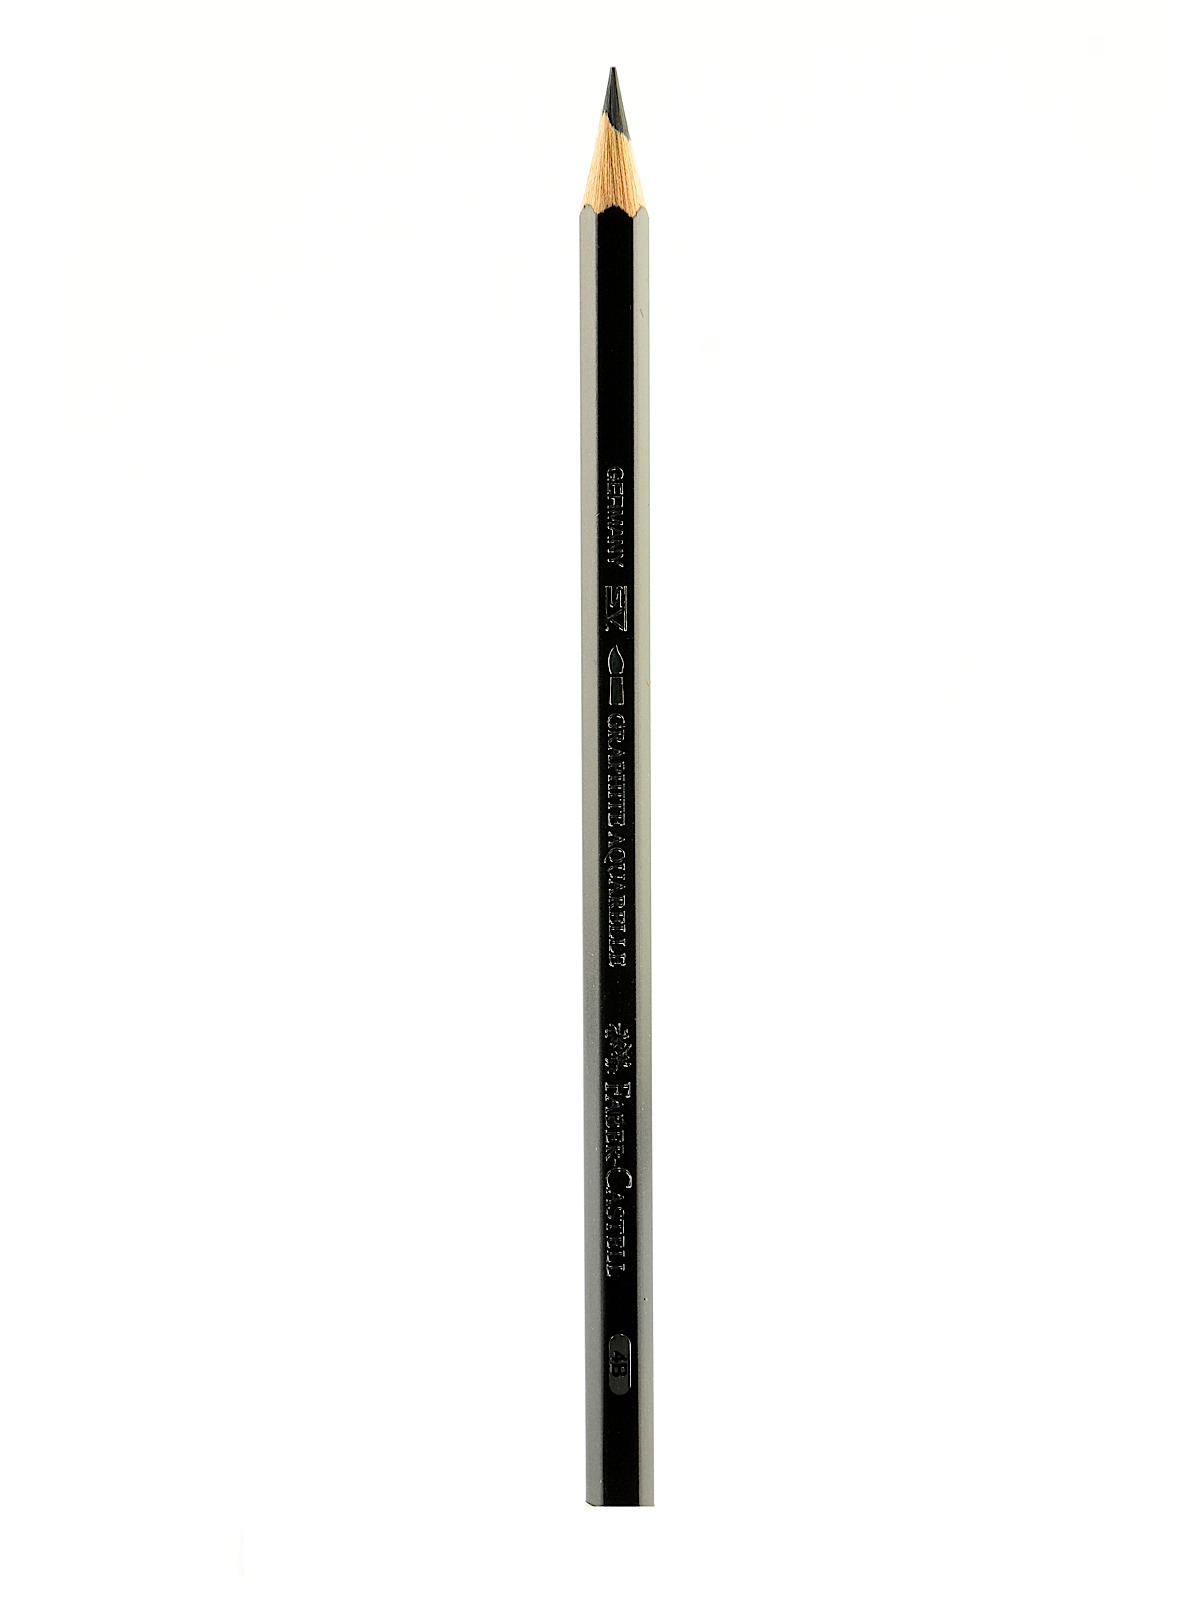 Graphite Aquarelle Water-soluble Pencils 4B Each